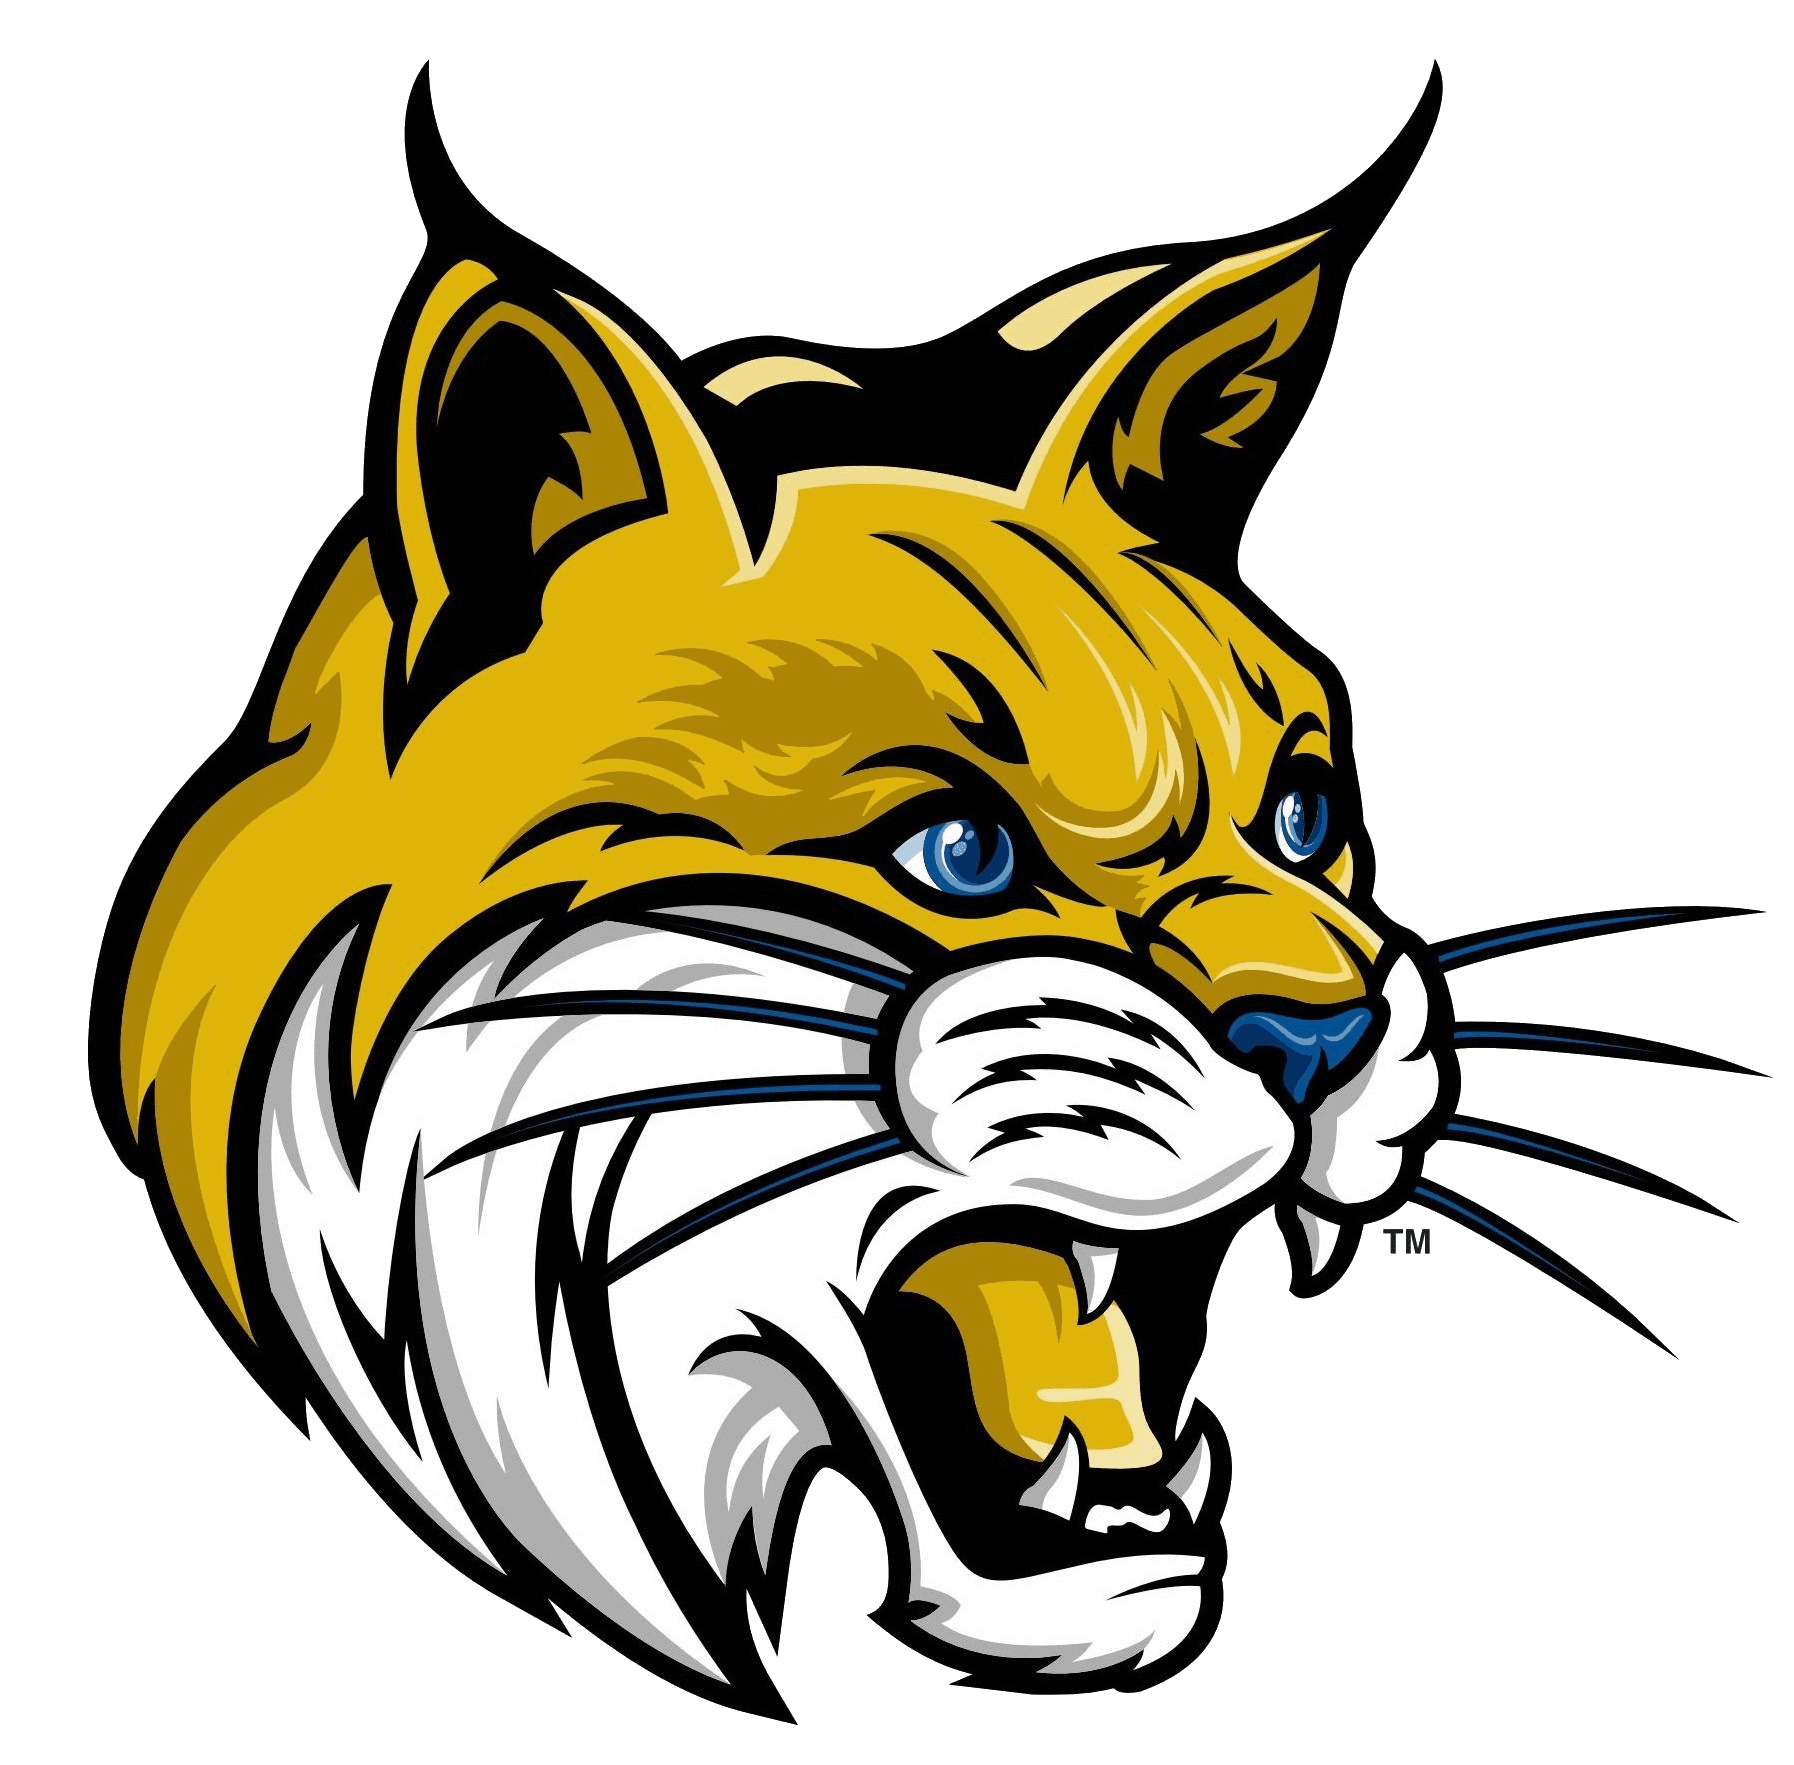 UC Merced Golden Bobcats Logo png